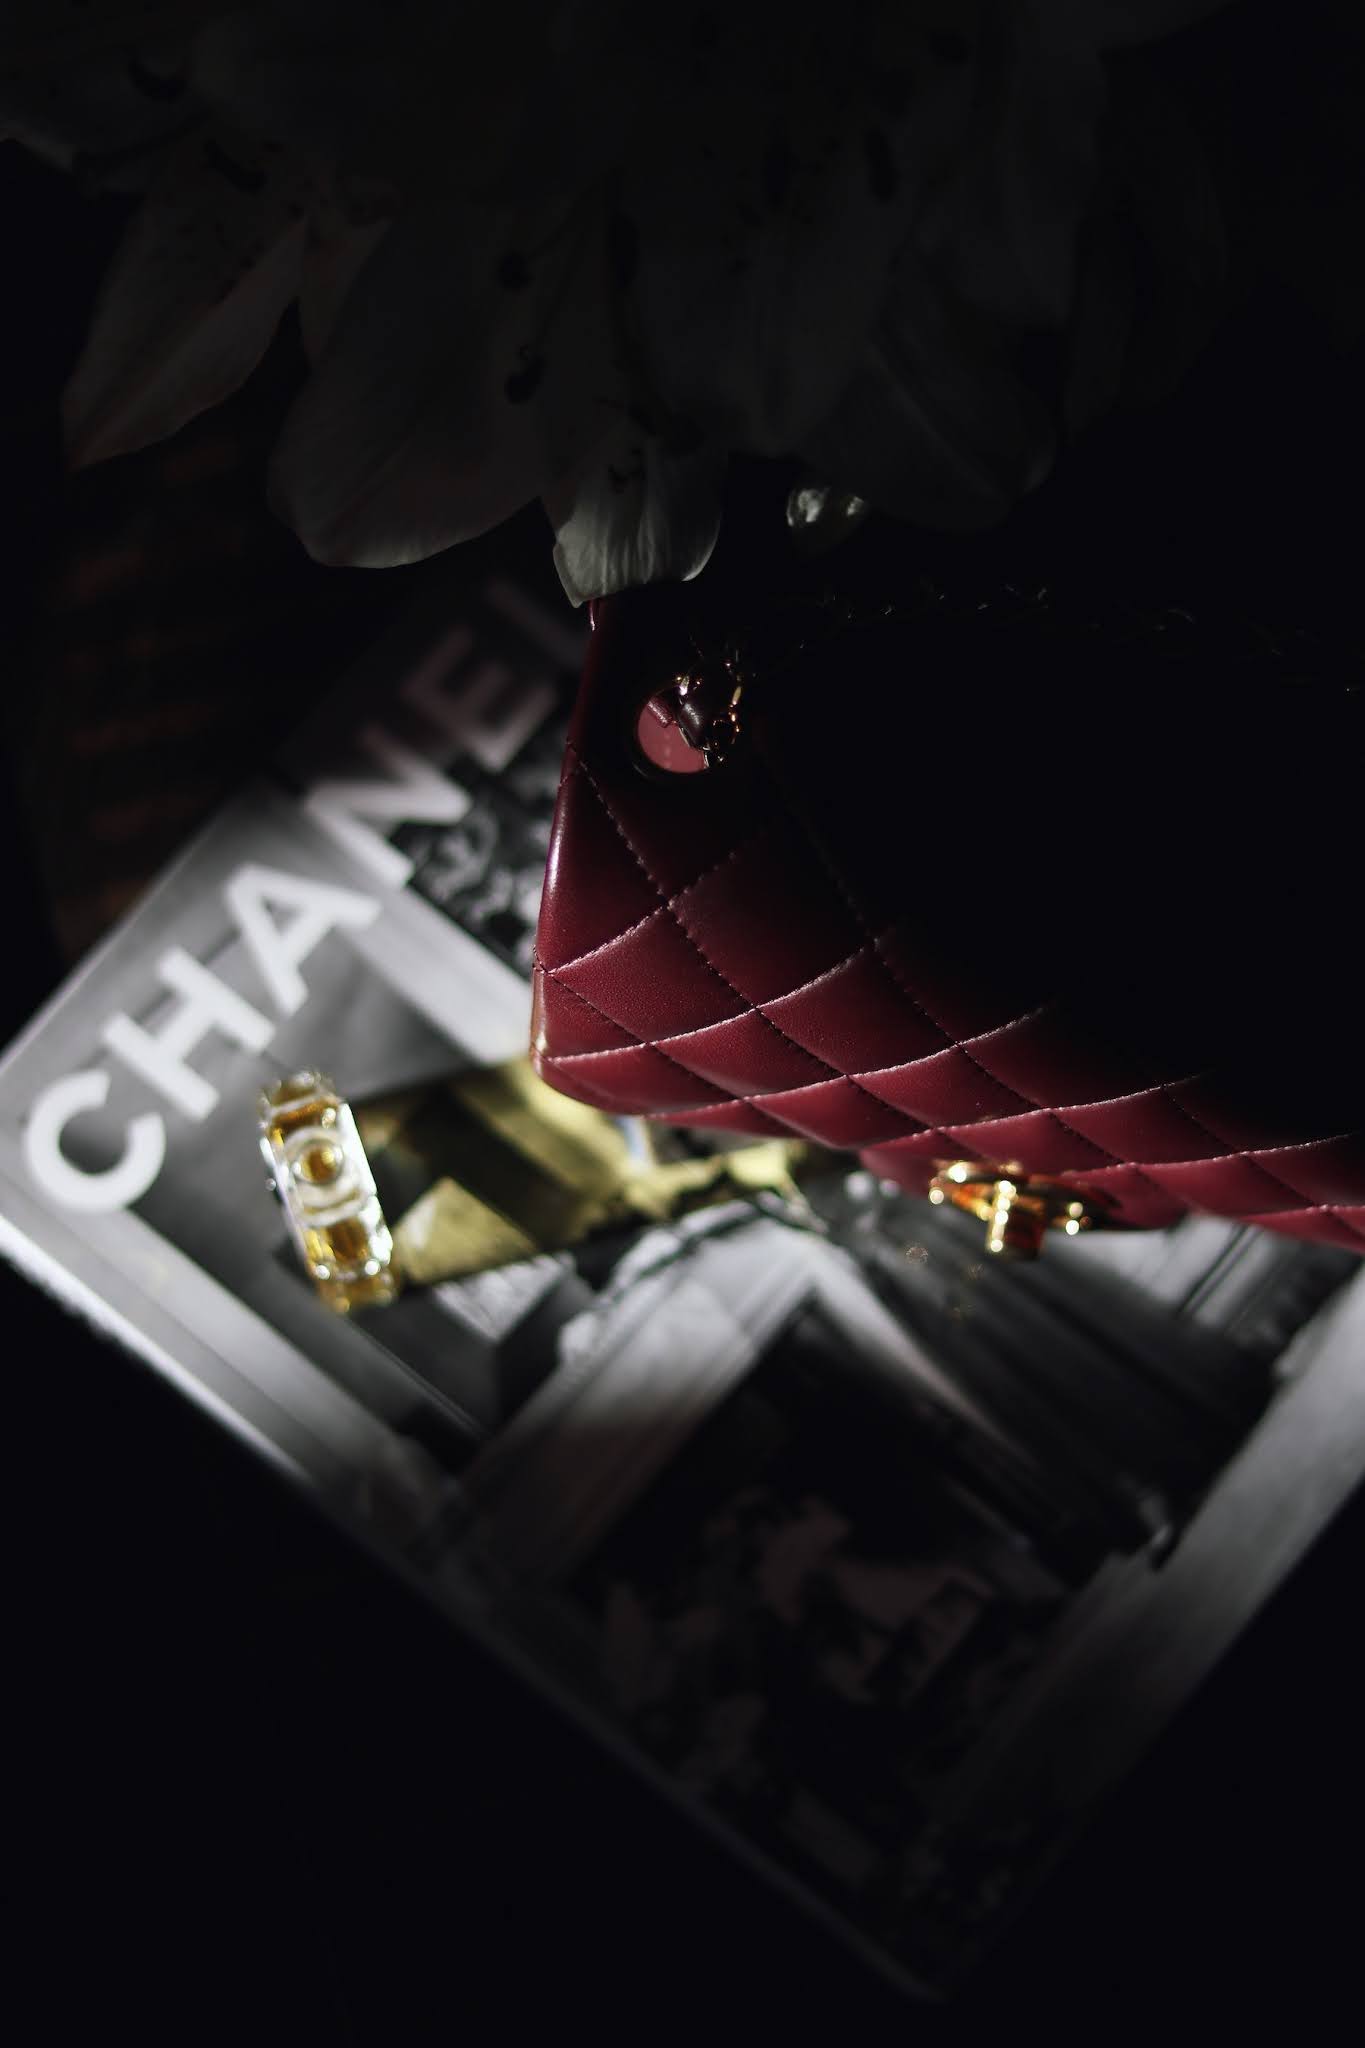 Chanel No.5: An icon @ 100 — Covet & Acquire